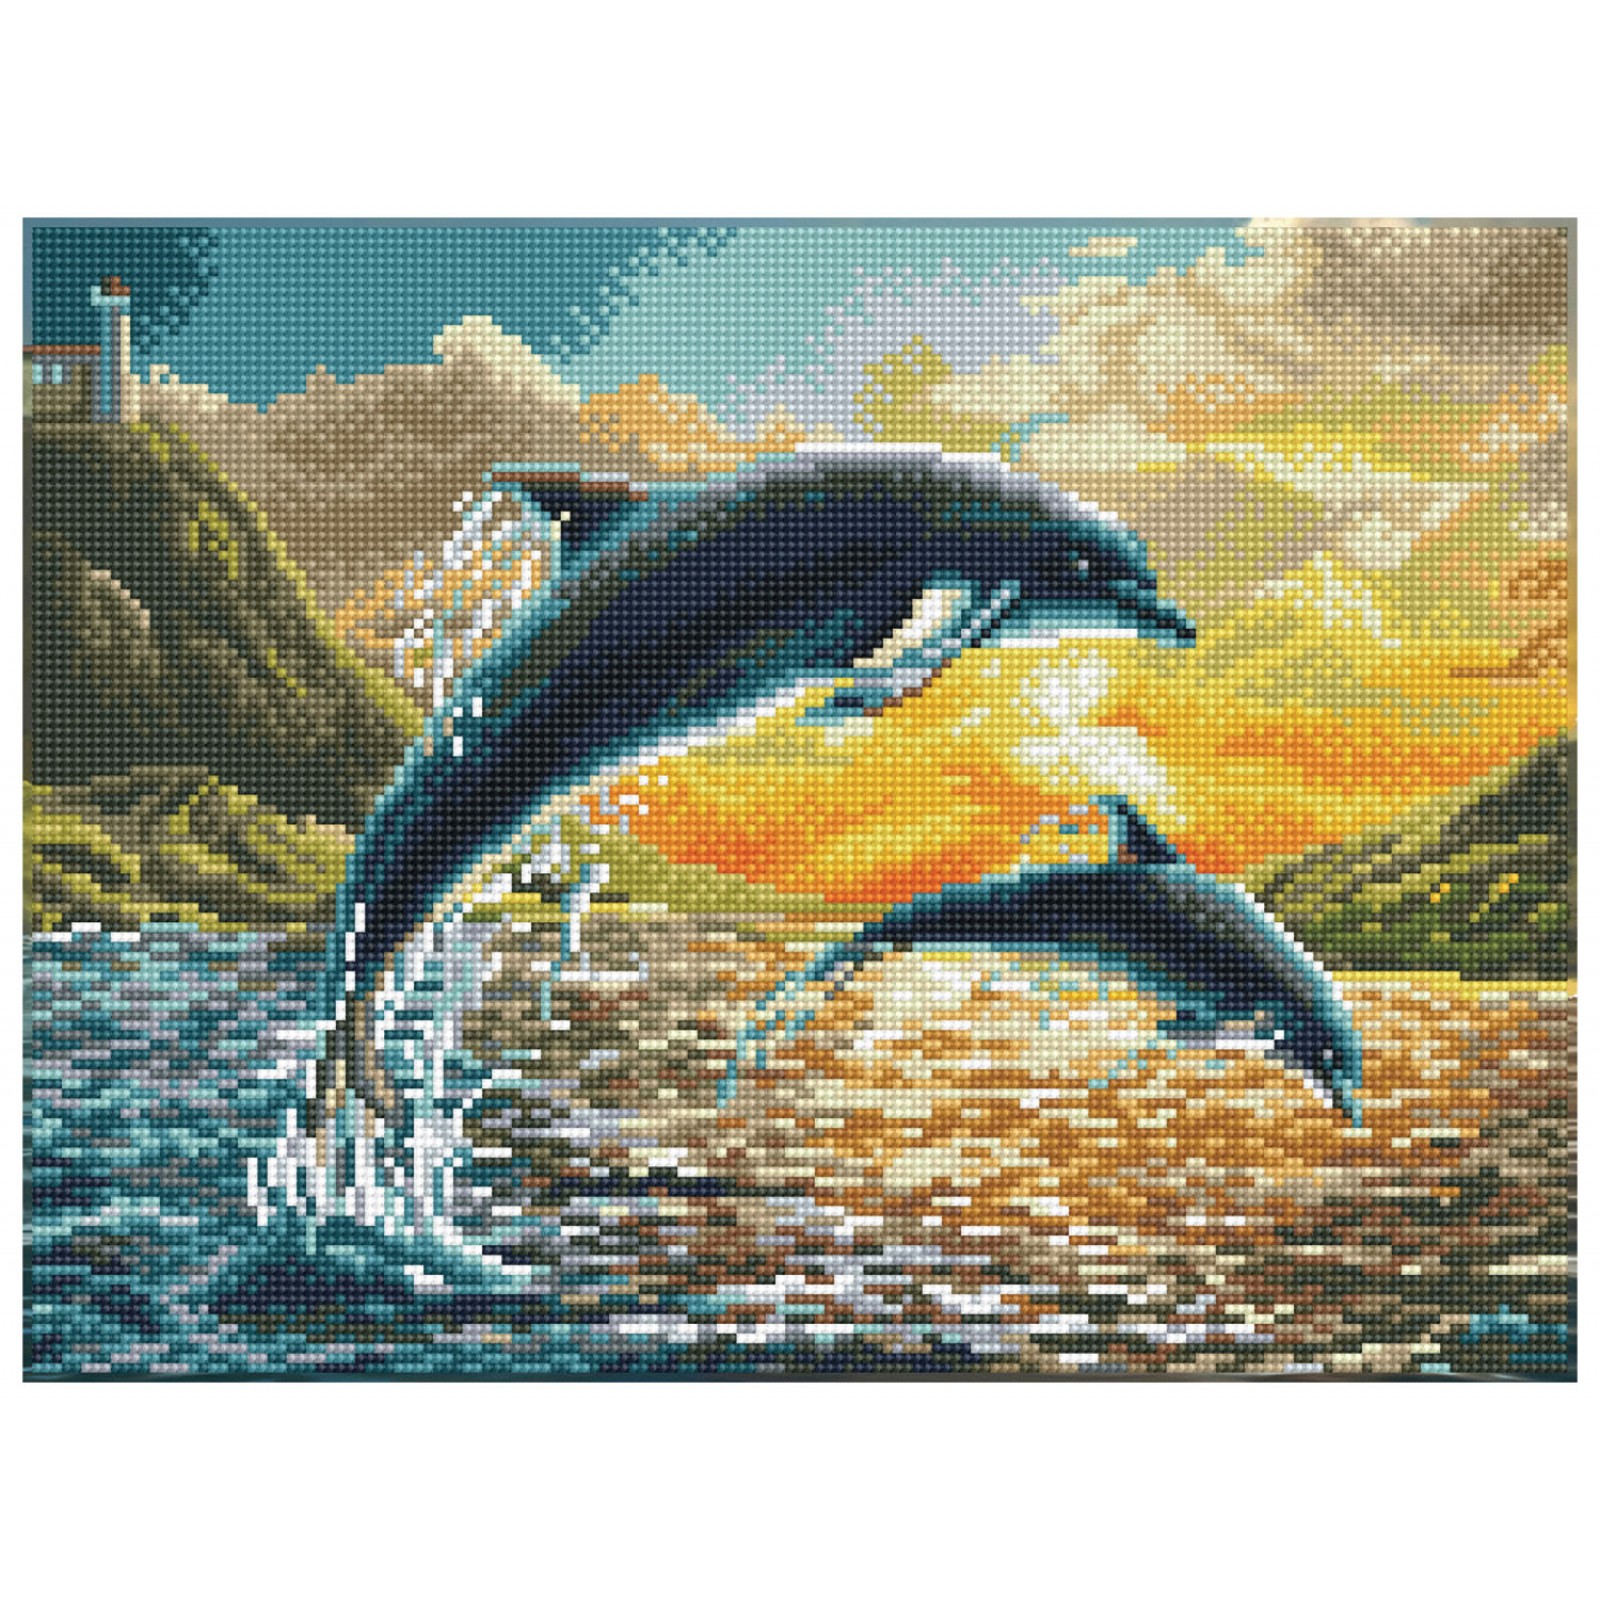 Dolphin Sunset - Pre-Framed Kit - Diamond Painting Kit with Frame